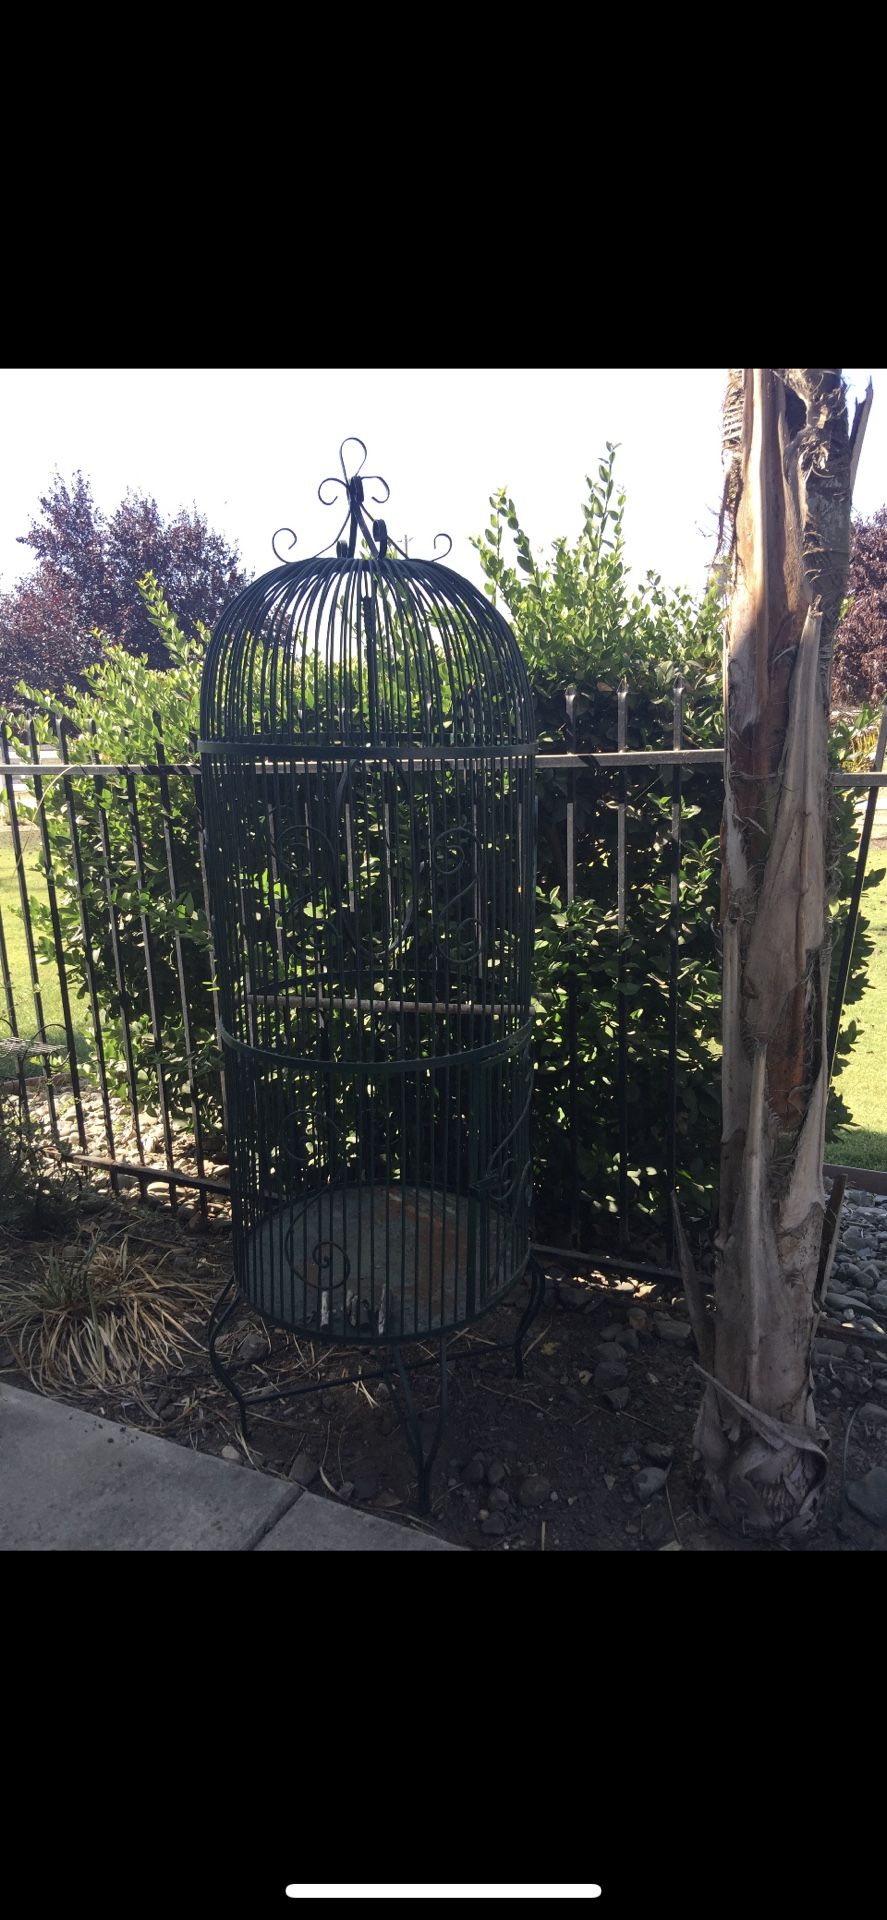 Green bird cage